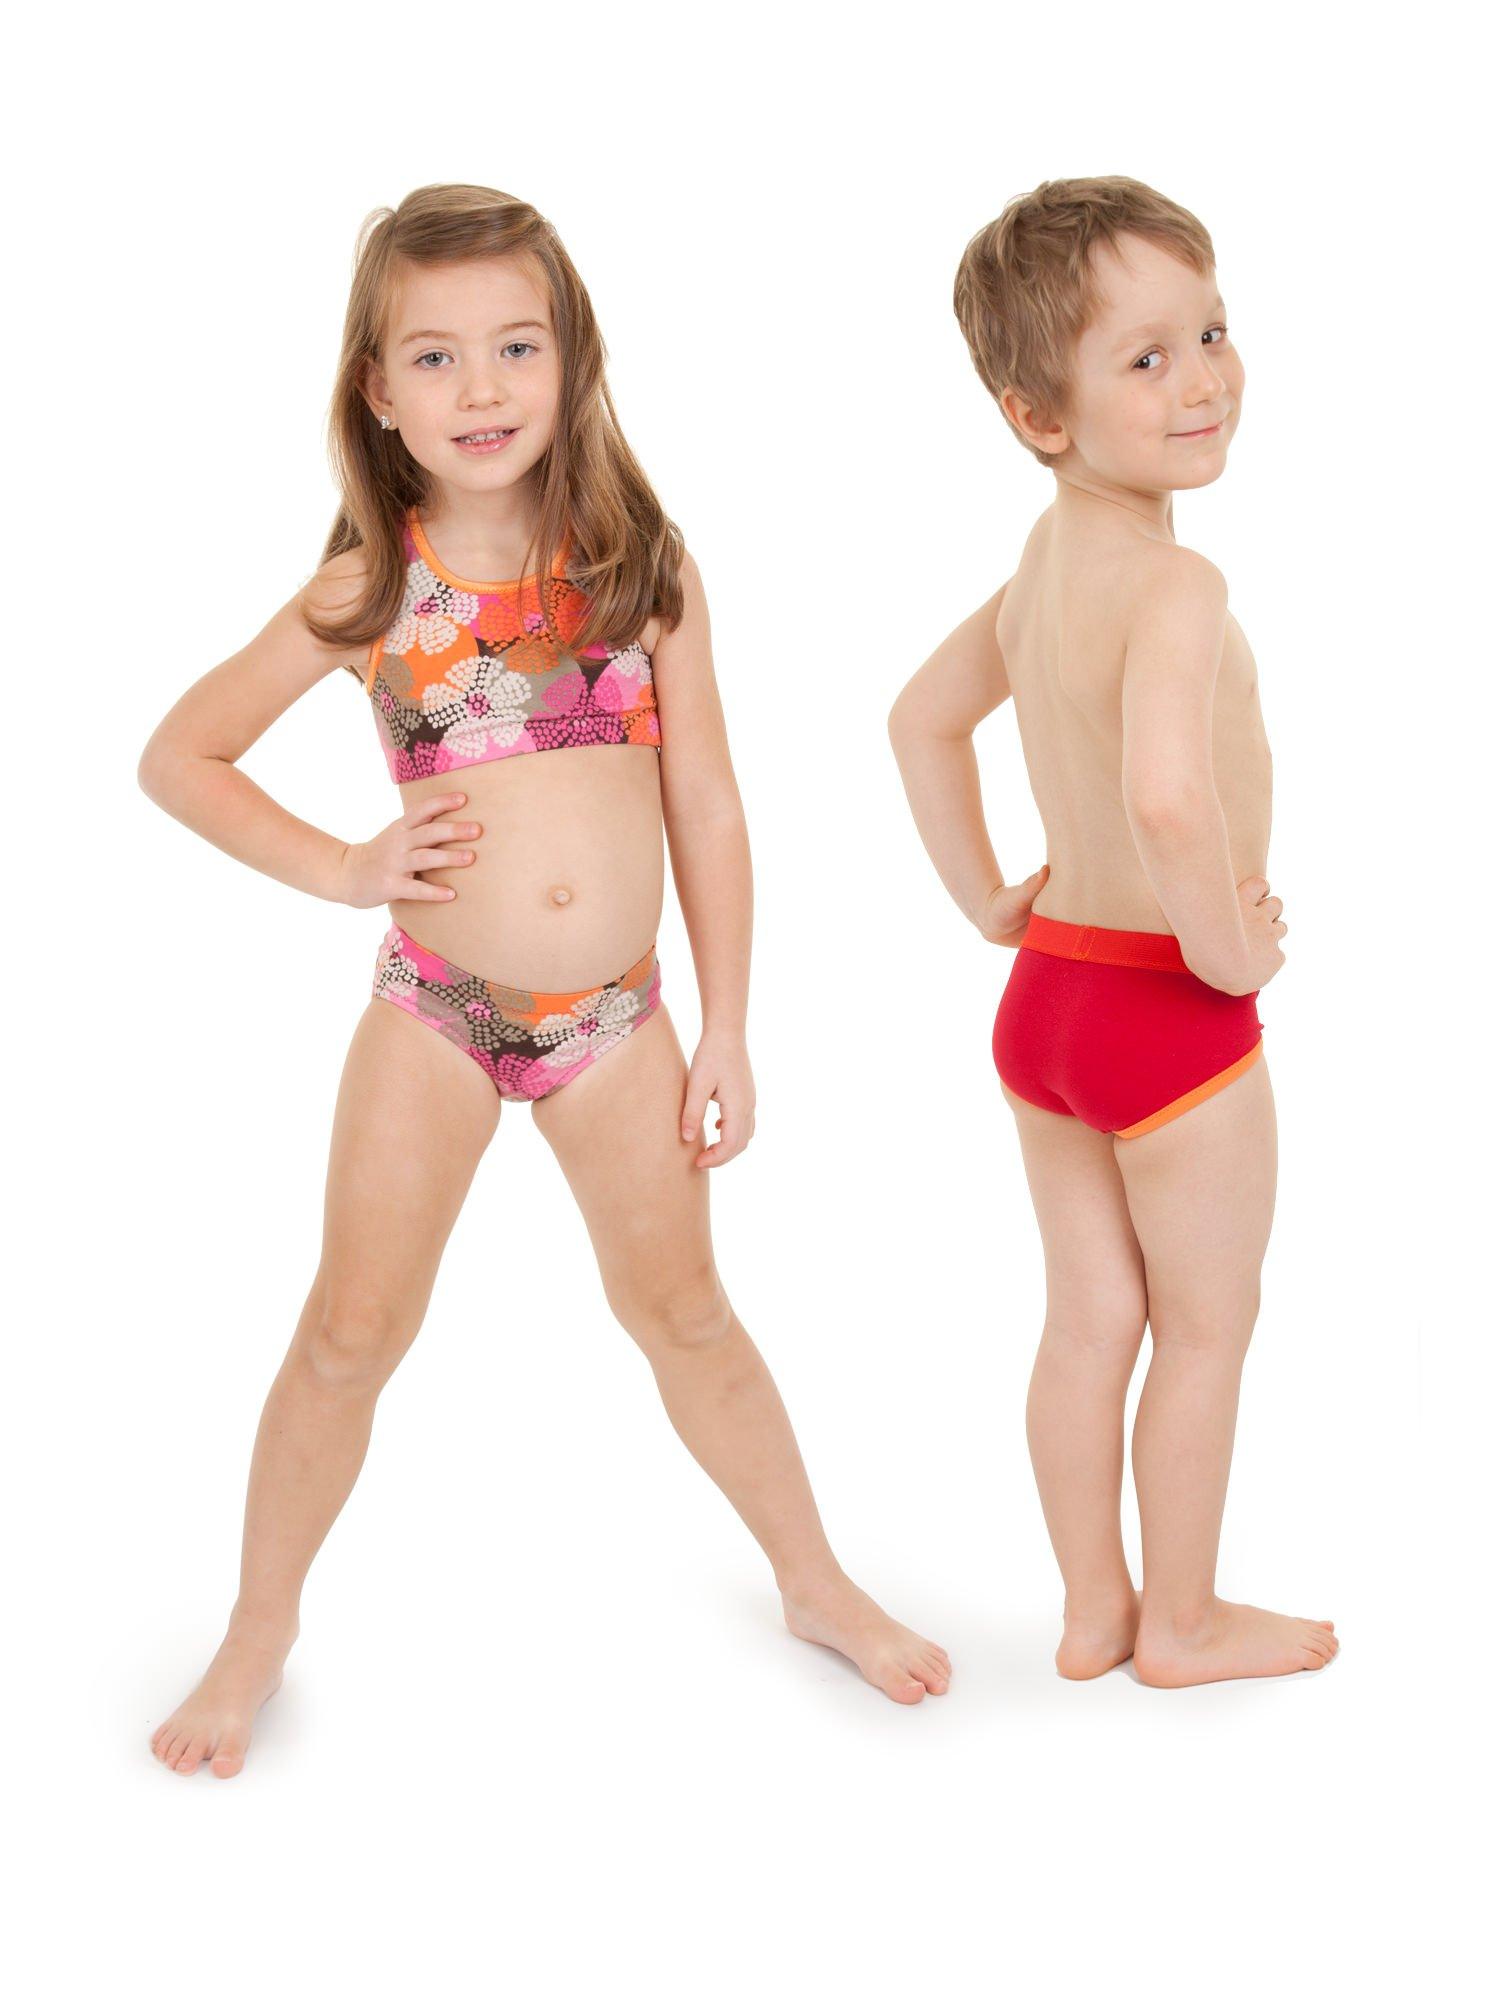 Jalie 3242 - Sewing pattern for girls's low-waist bikini and boys' briefs